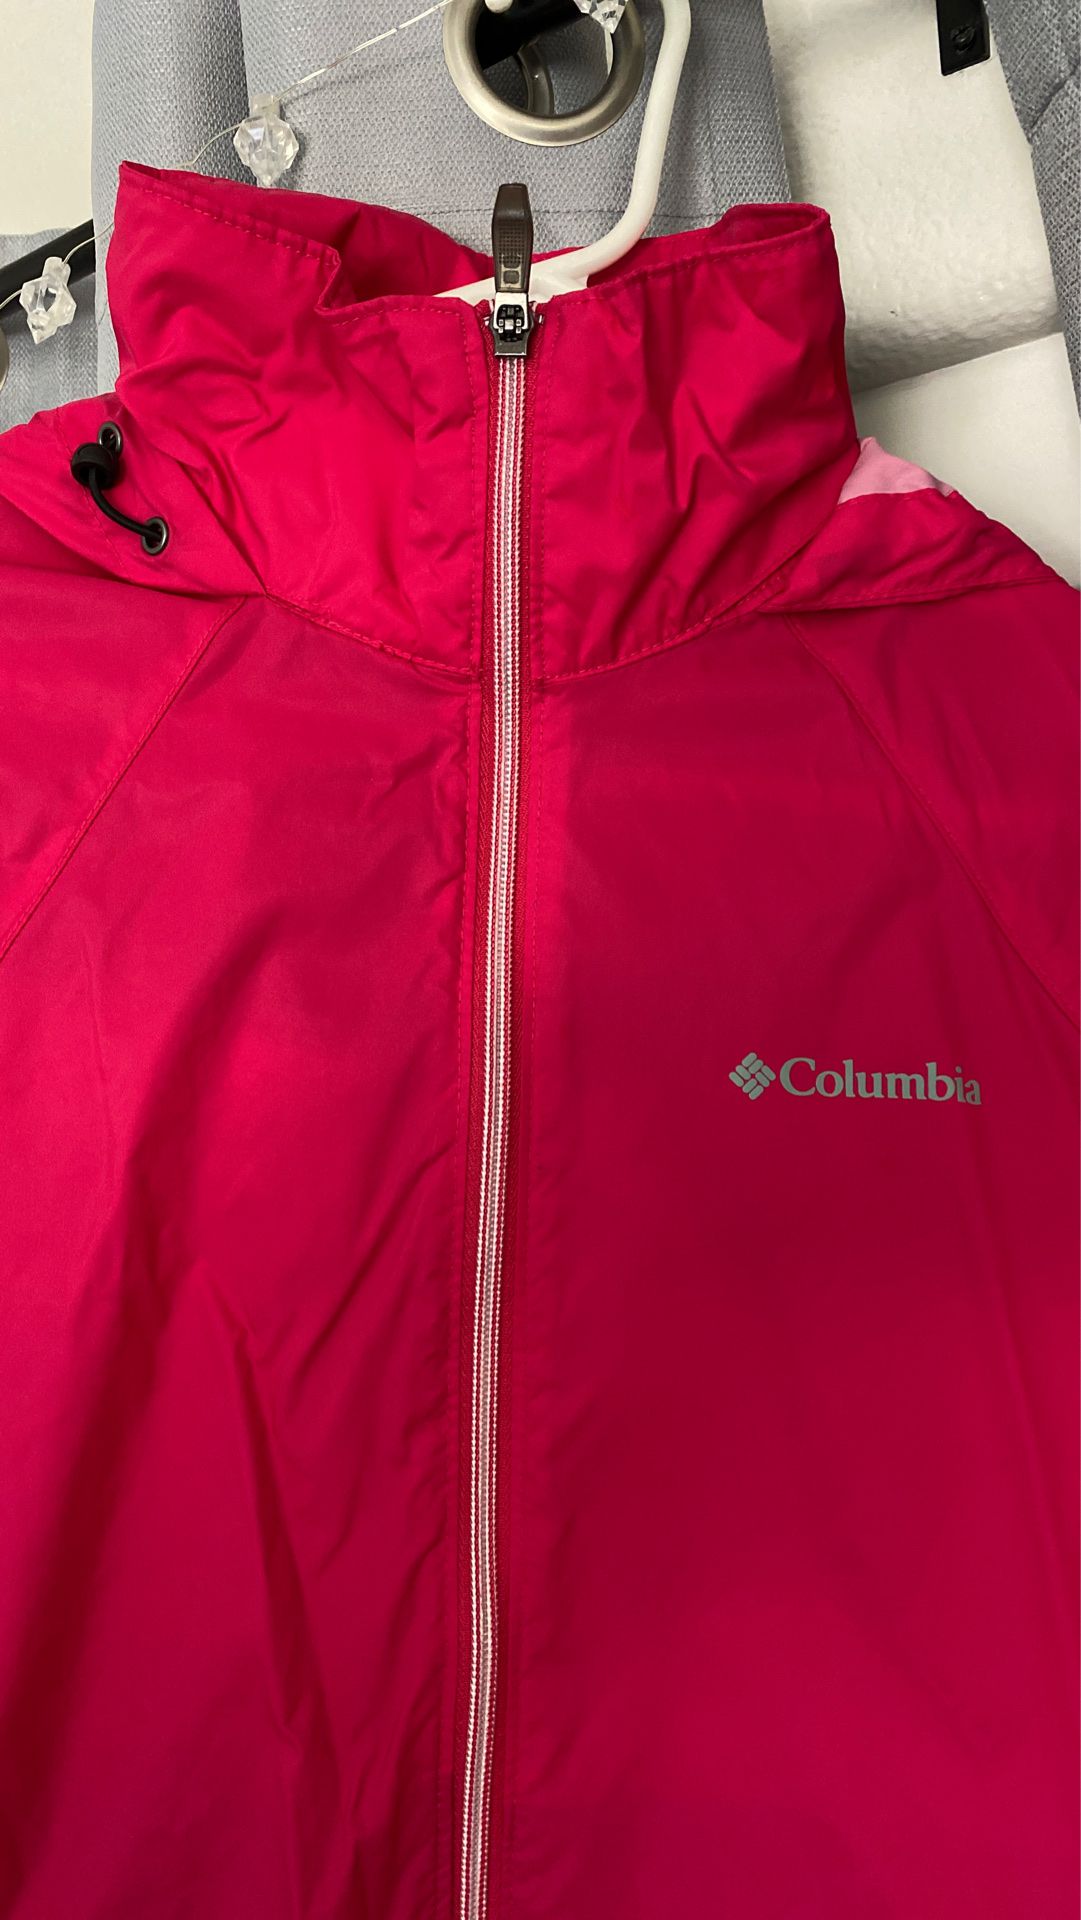 Pink Columbia size small jacket women’s